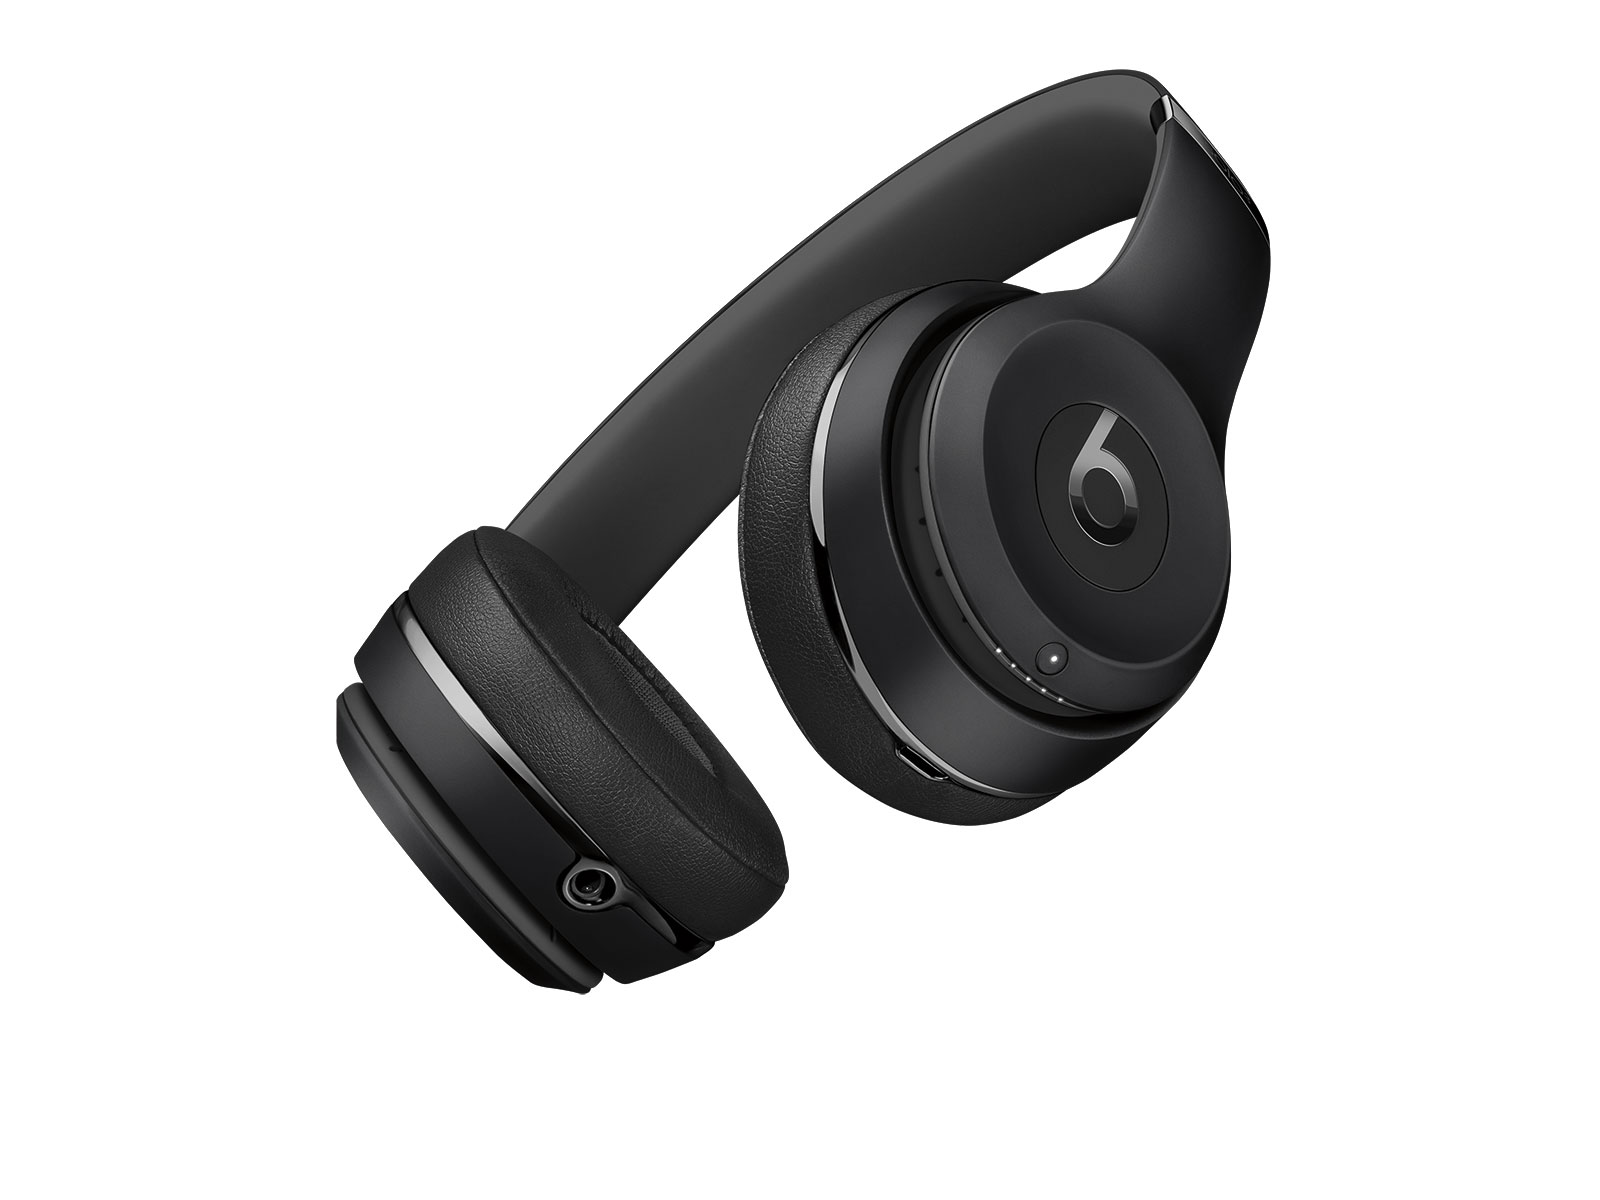 Solo3 Wireless Headphones - Black |  Humac